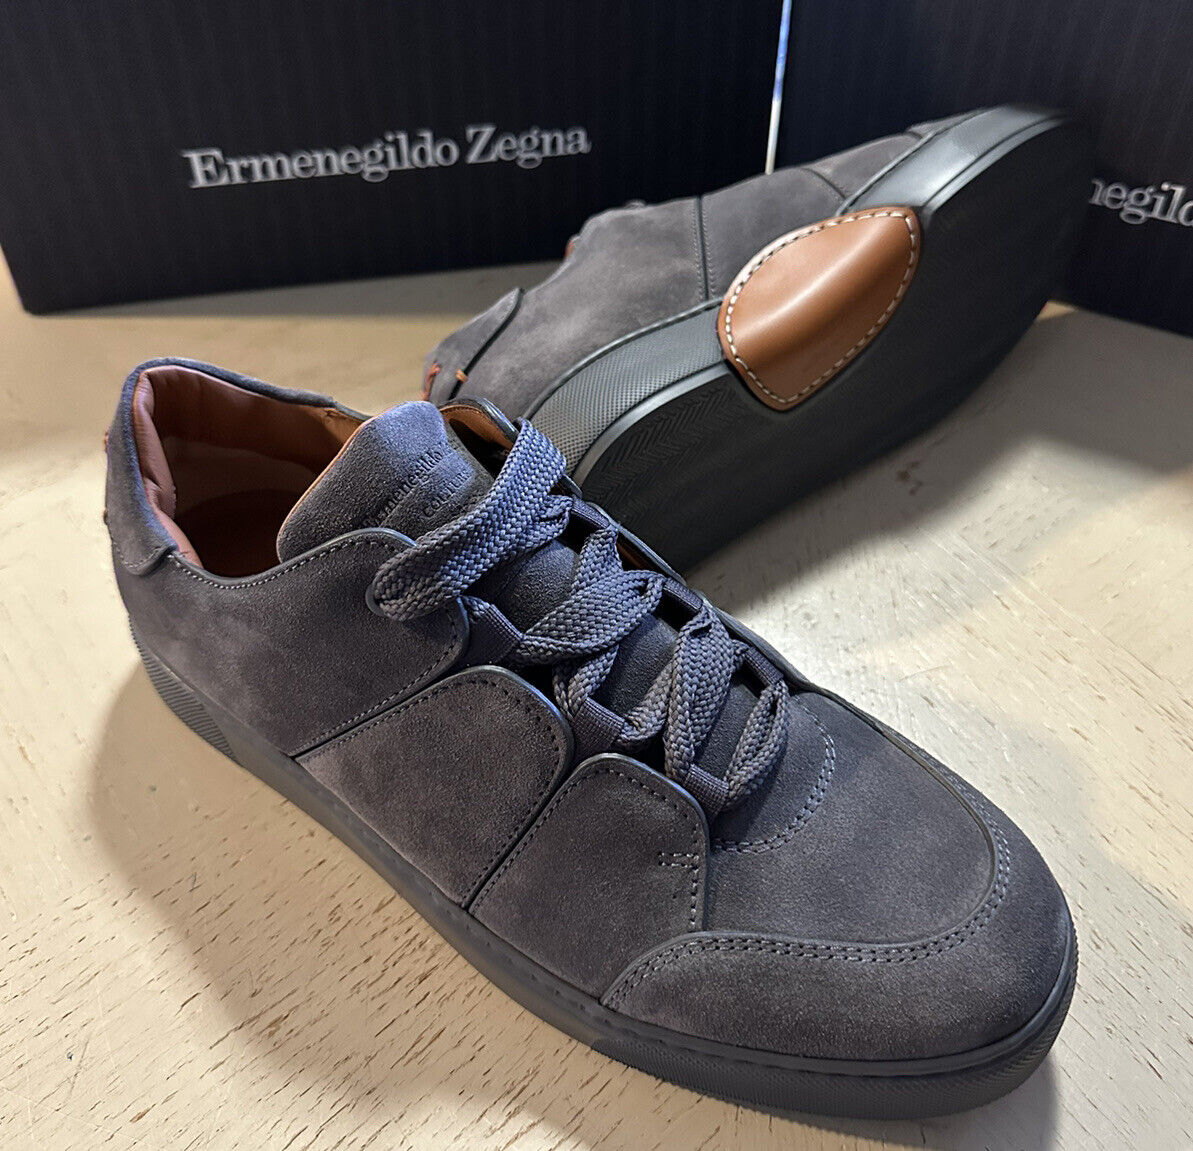 New $850 Ermenegildo Zegna Couture Suede/Leather Sneakers Shoe Dark Gray 10.5 US